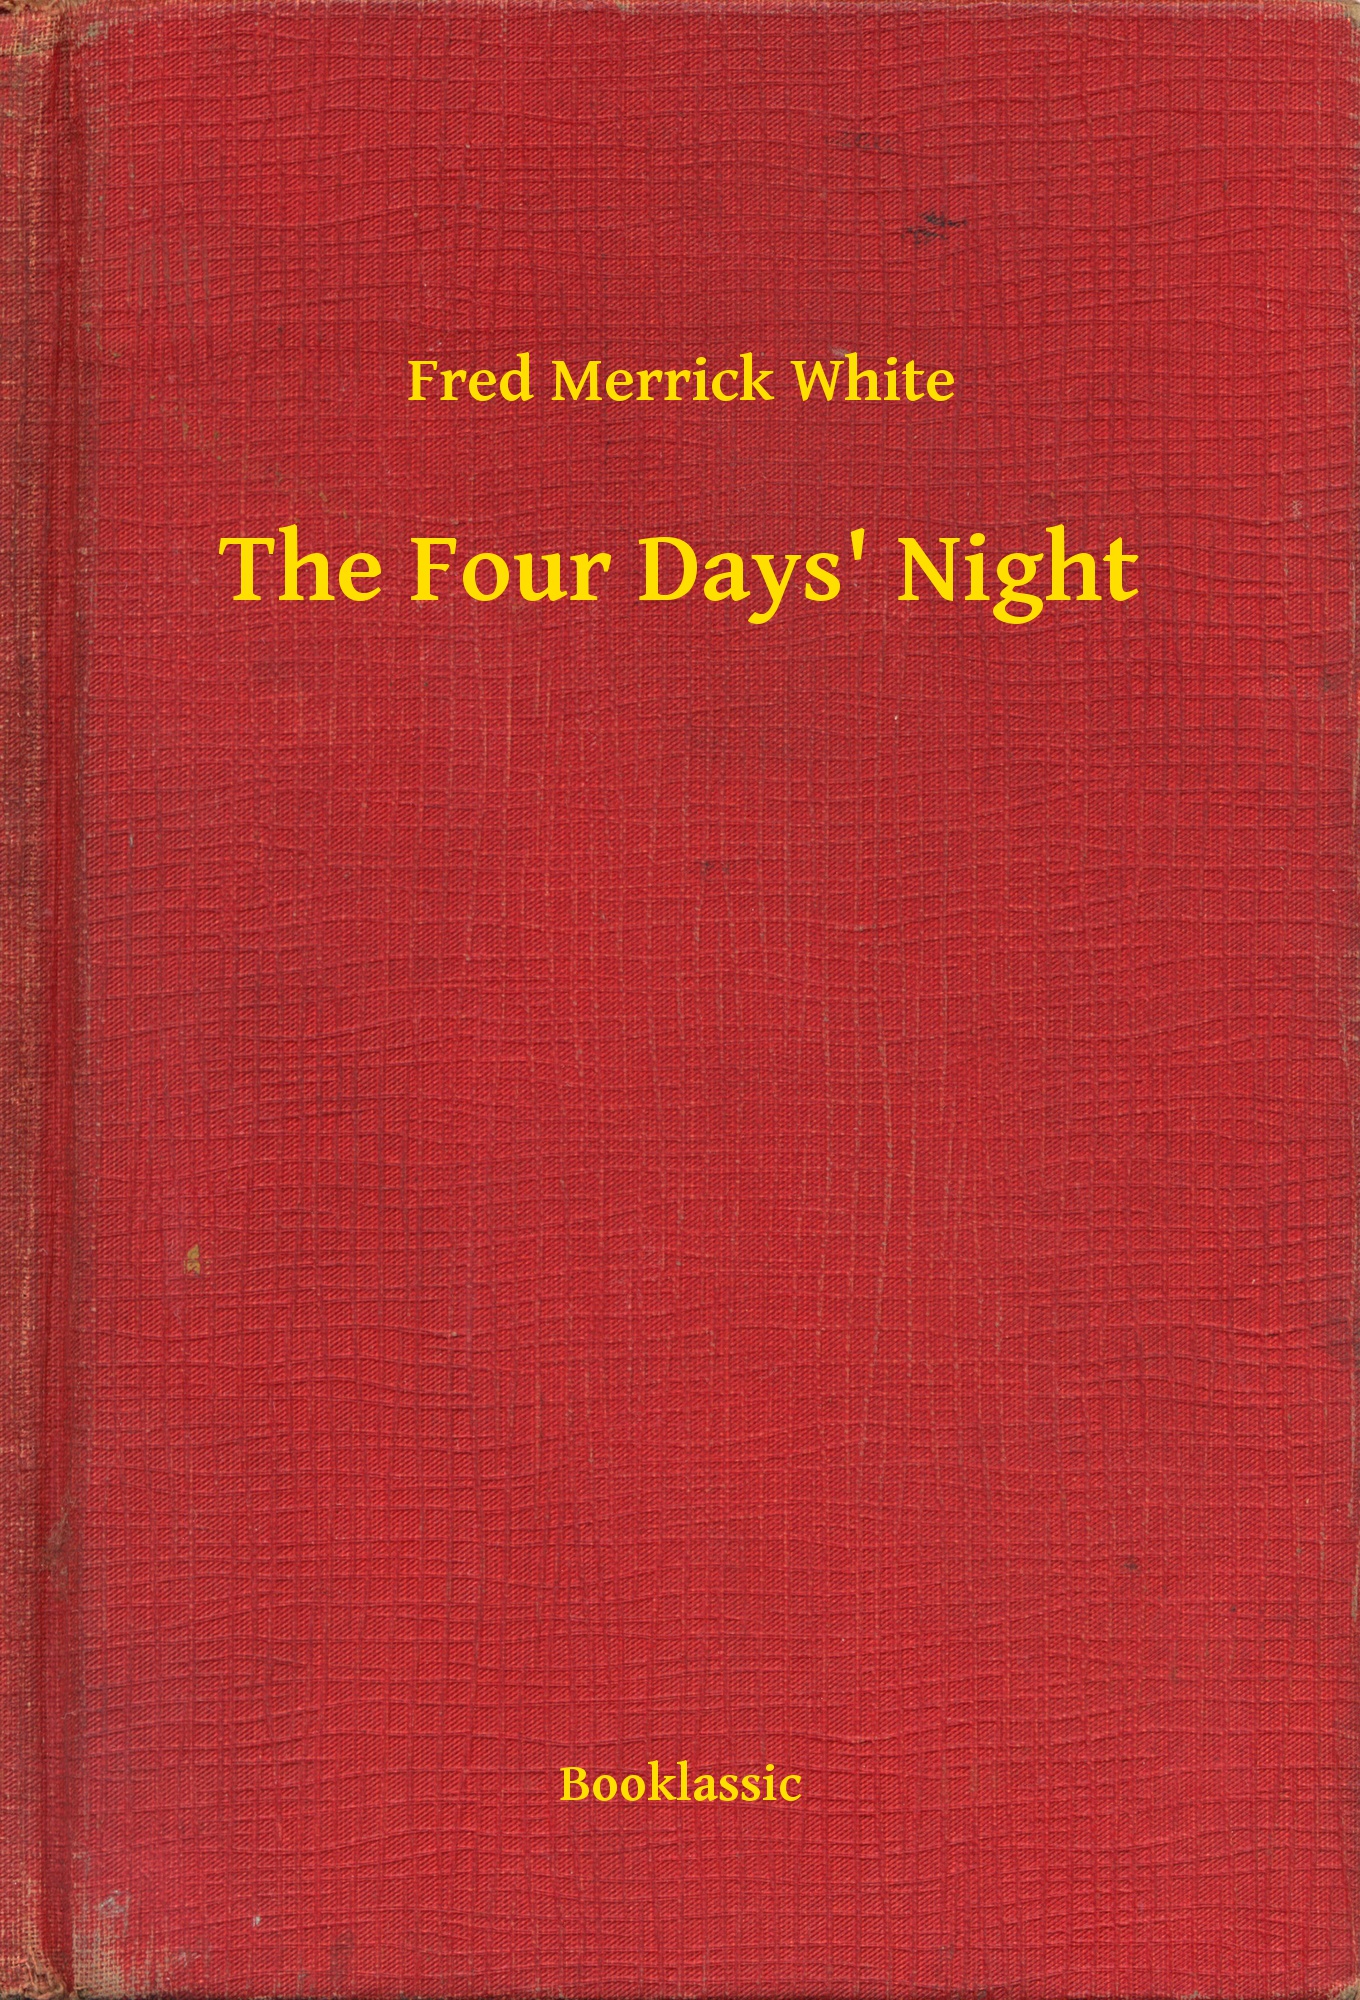 The Four Days" Night